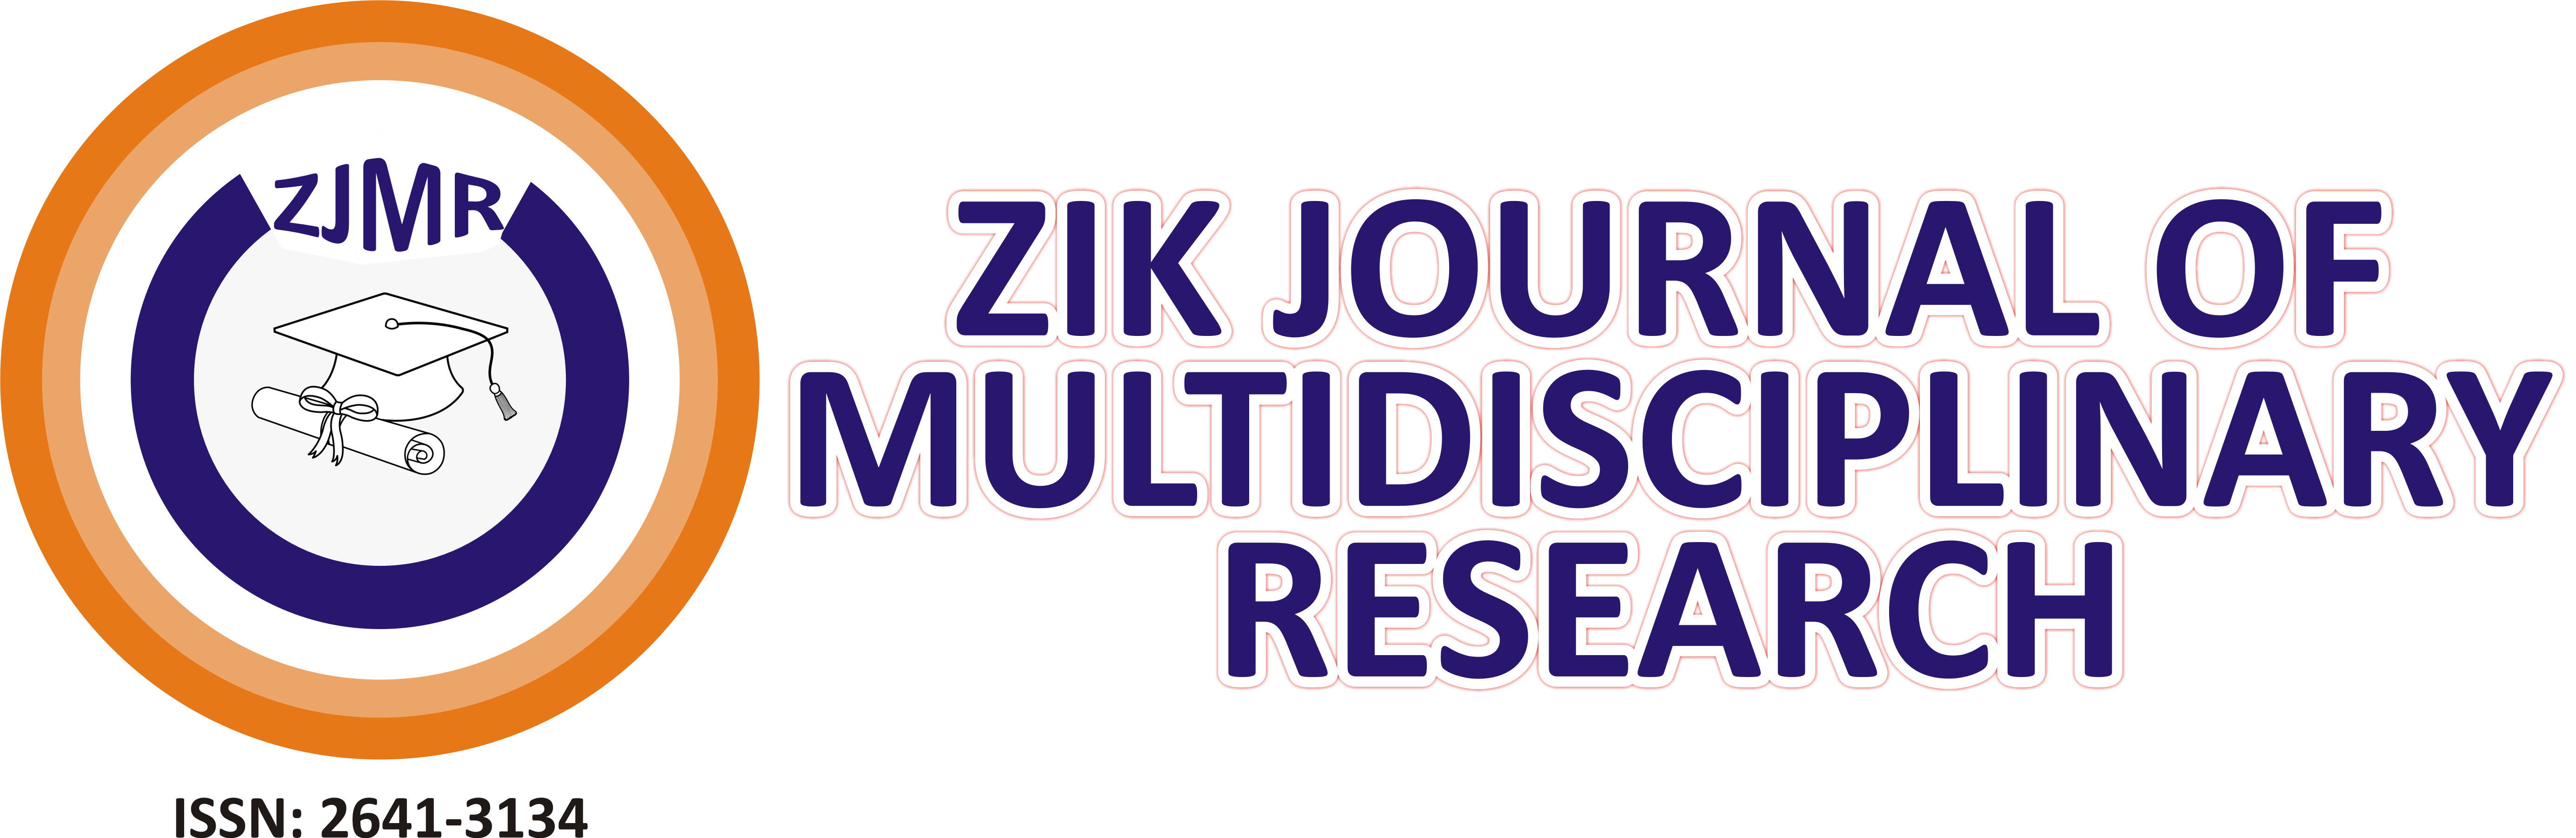 ZIK JOURNAL OF MULTIDISCIPLINARY RESEARCH